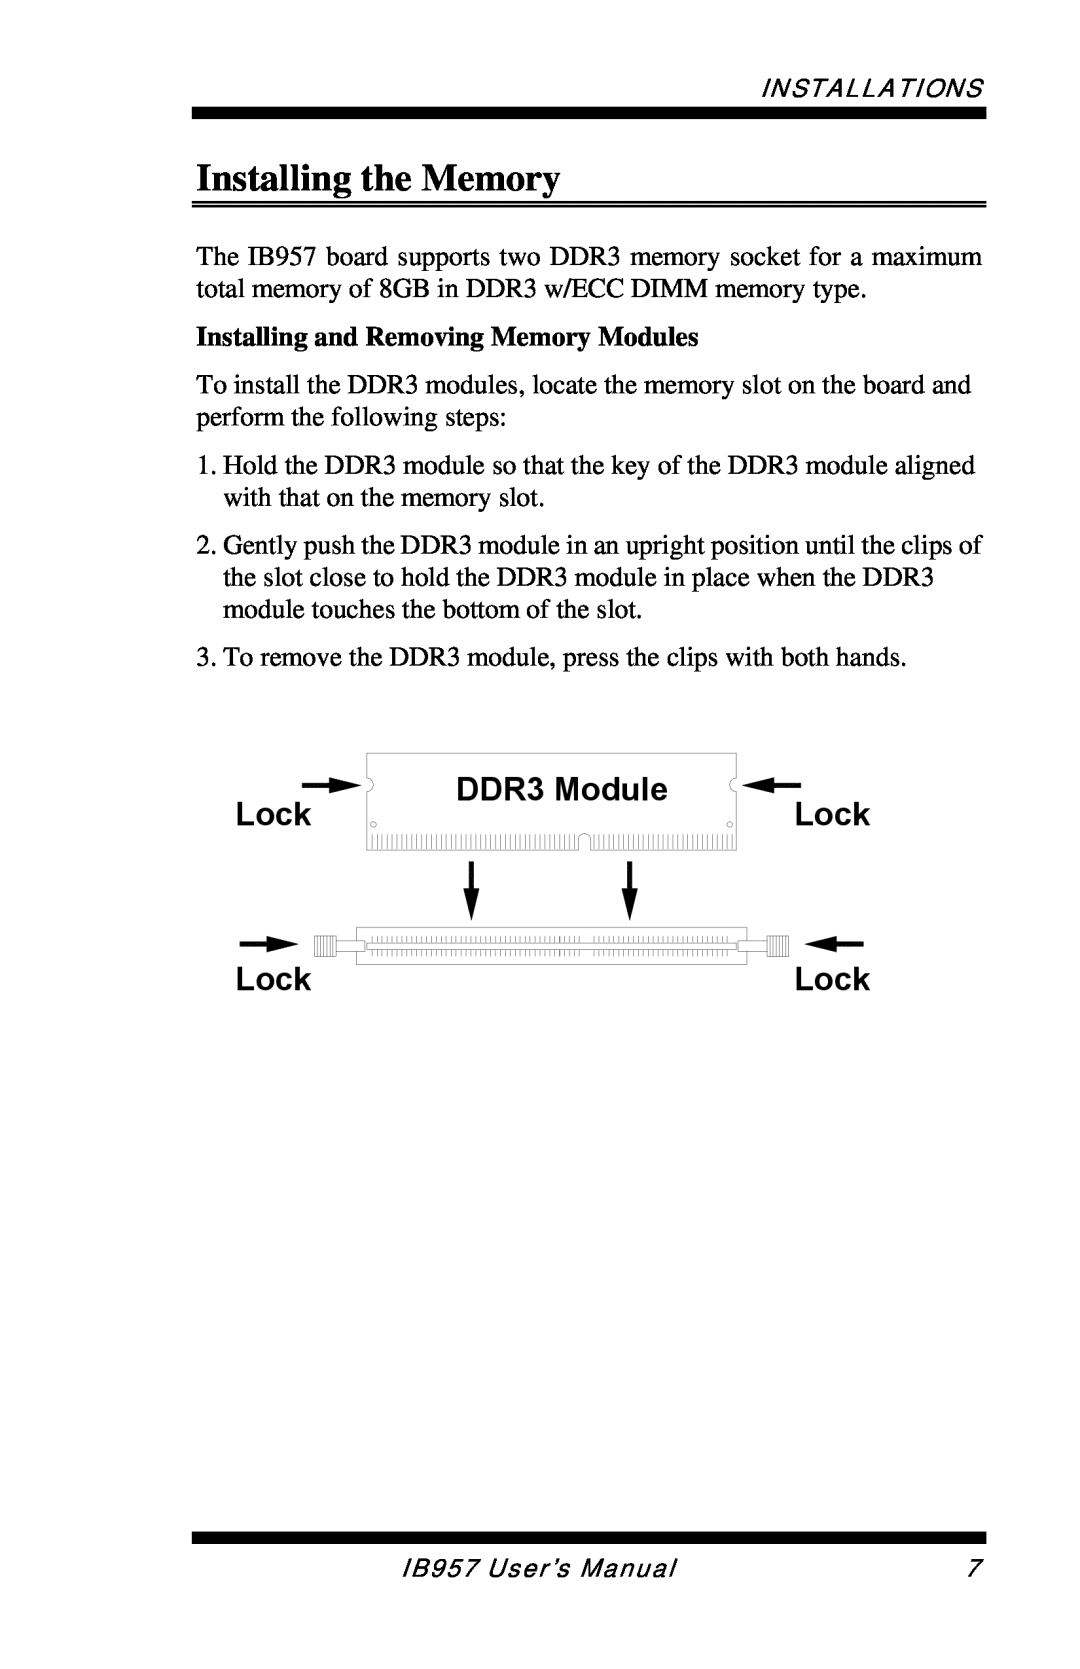 Intel IB957 user manual Installing the Memory, DDR3 Module Lock, Installing and Removing Memory Modules 